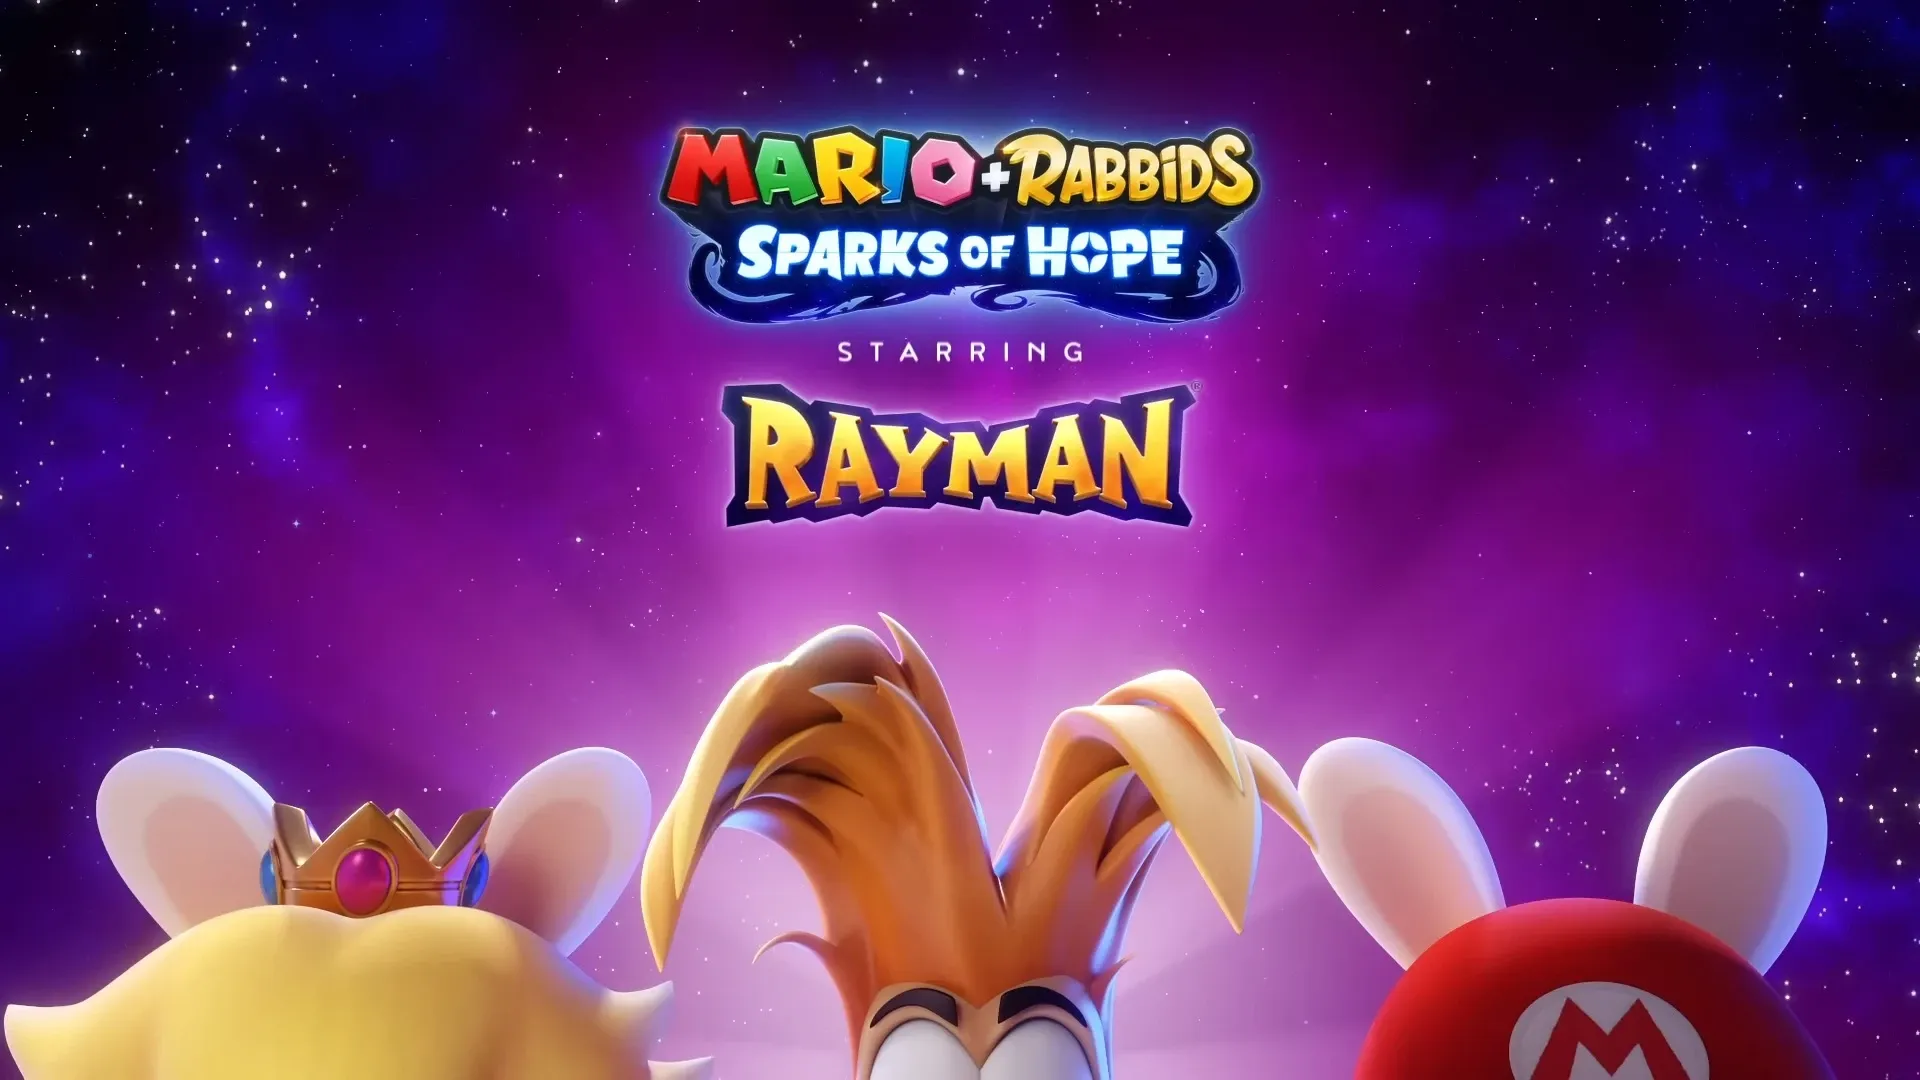 Mario-Rabbids-Sparks-of-Hope_-RAYMAN-DLC-3-Teaser-_-UbiForward-0-22-screenshot-0f25